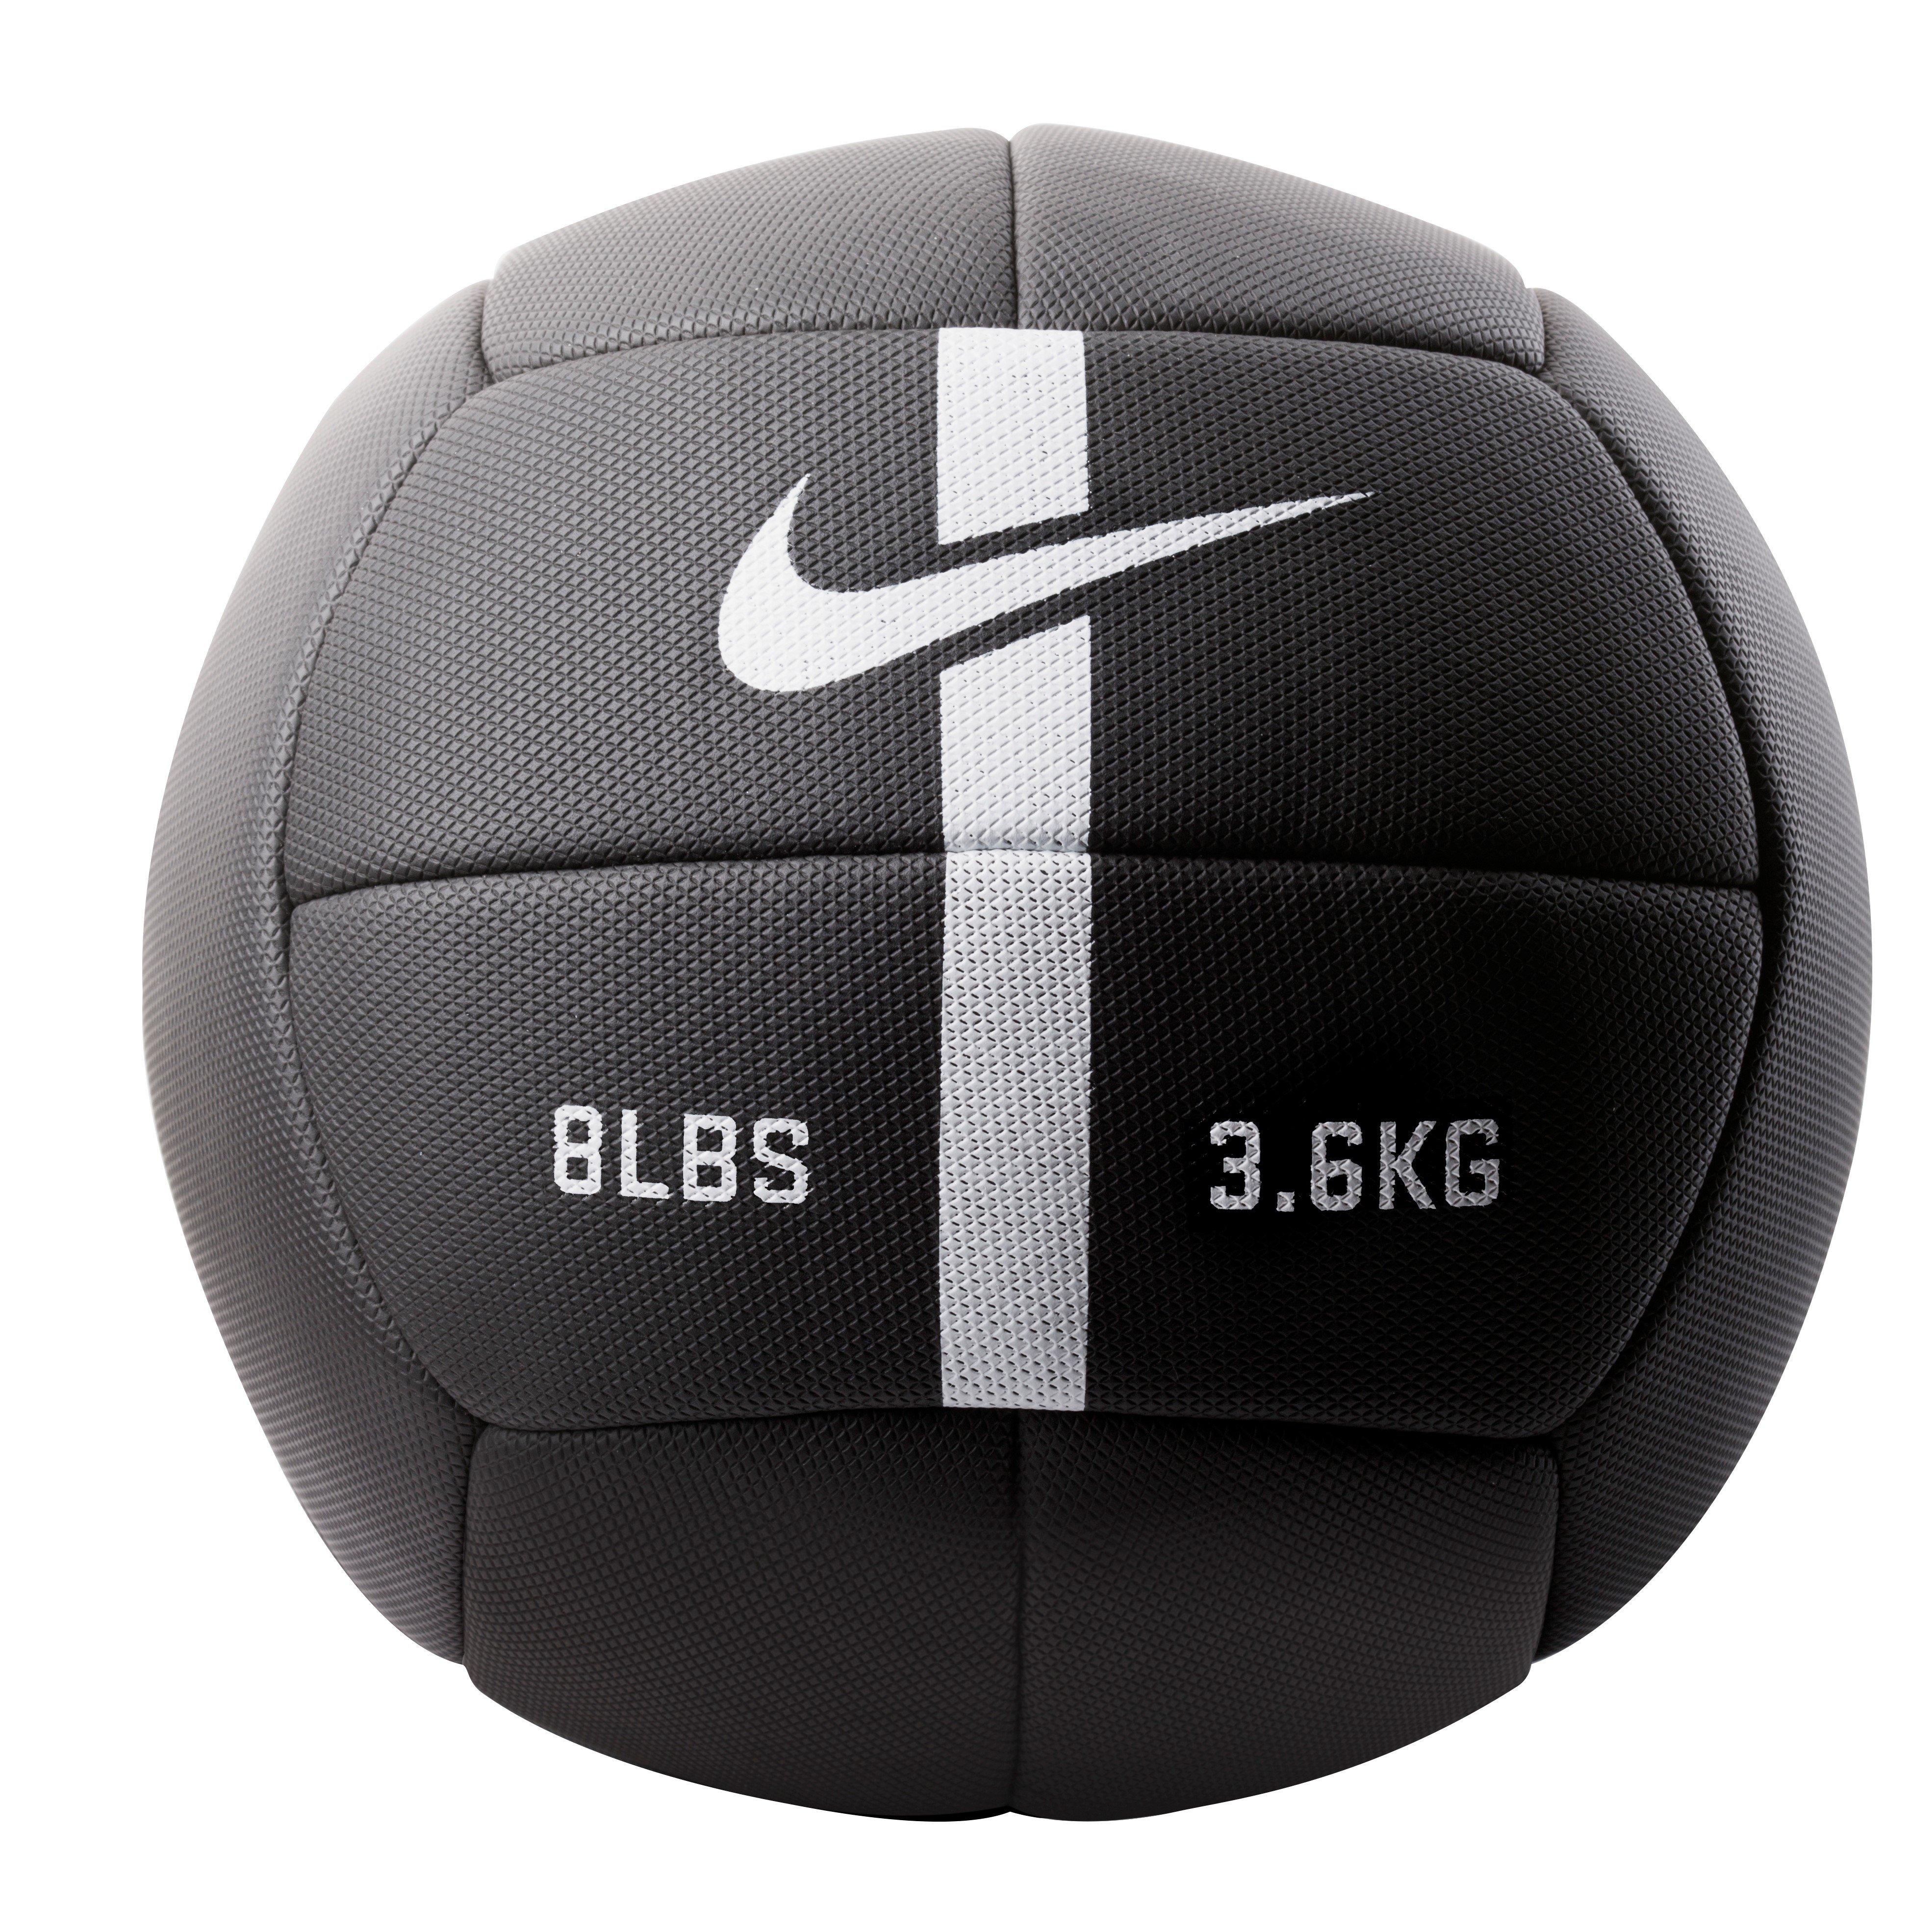 Nike Strength Training Ball 8 Lbs 